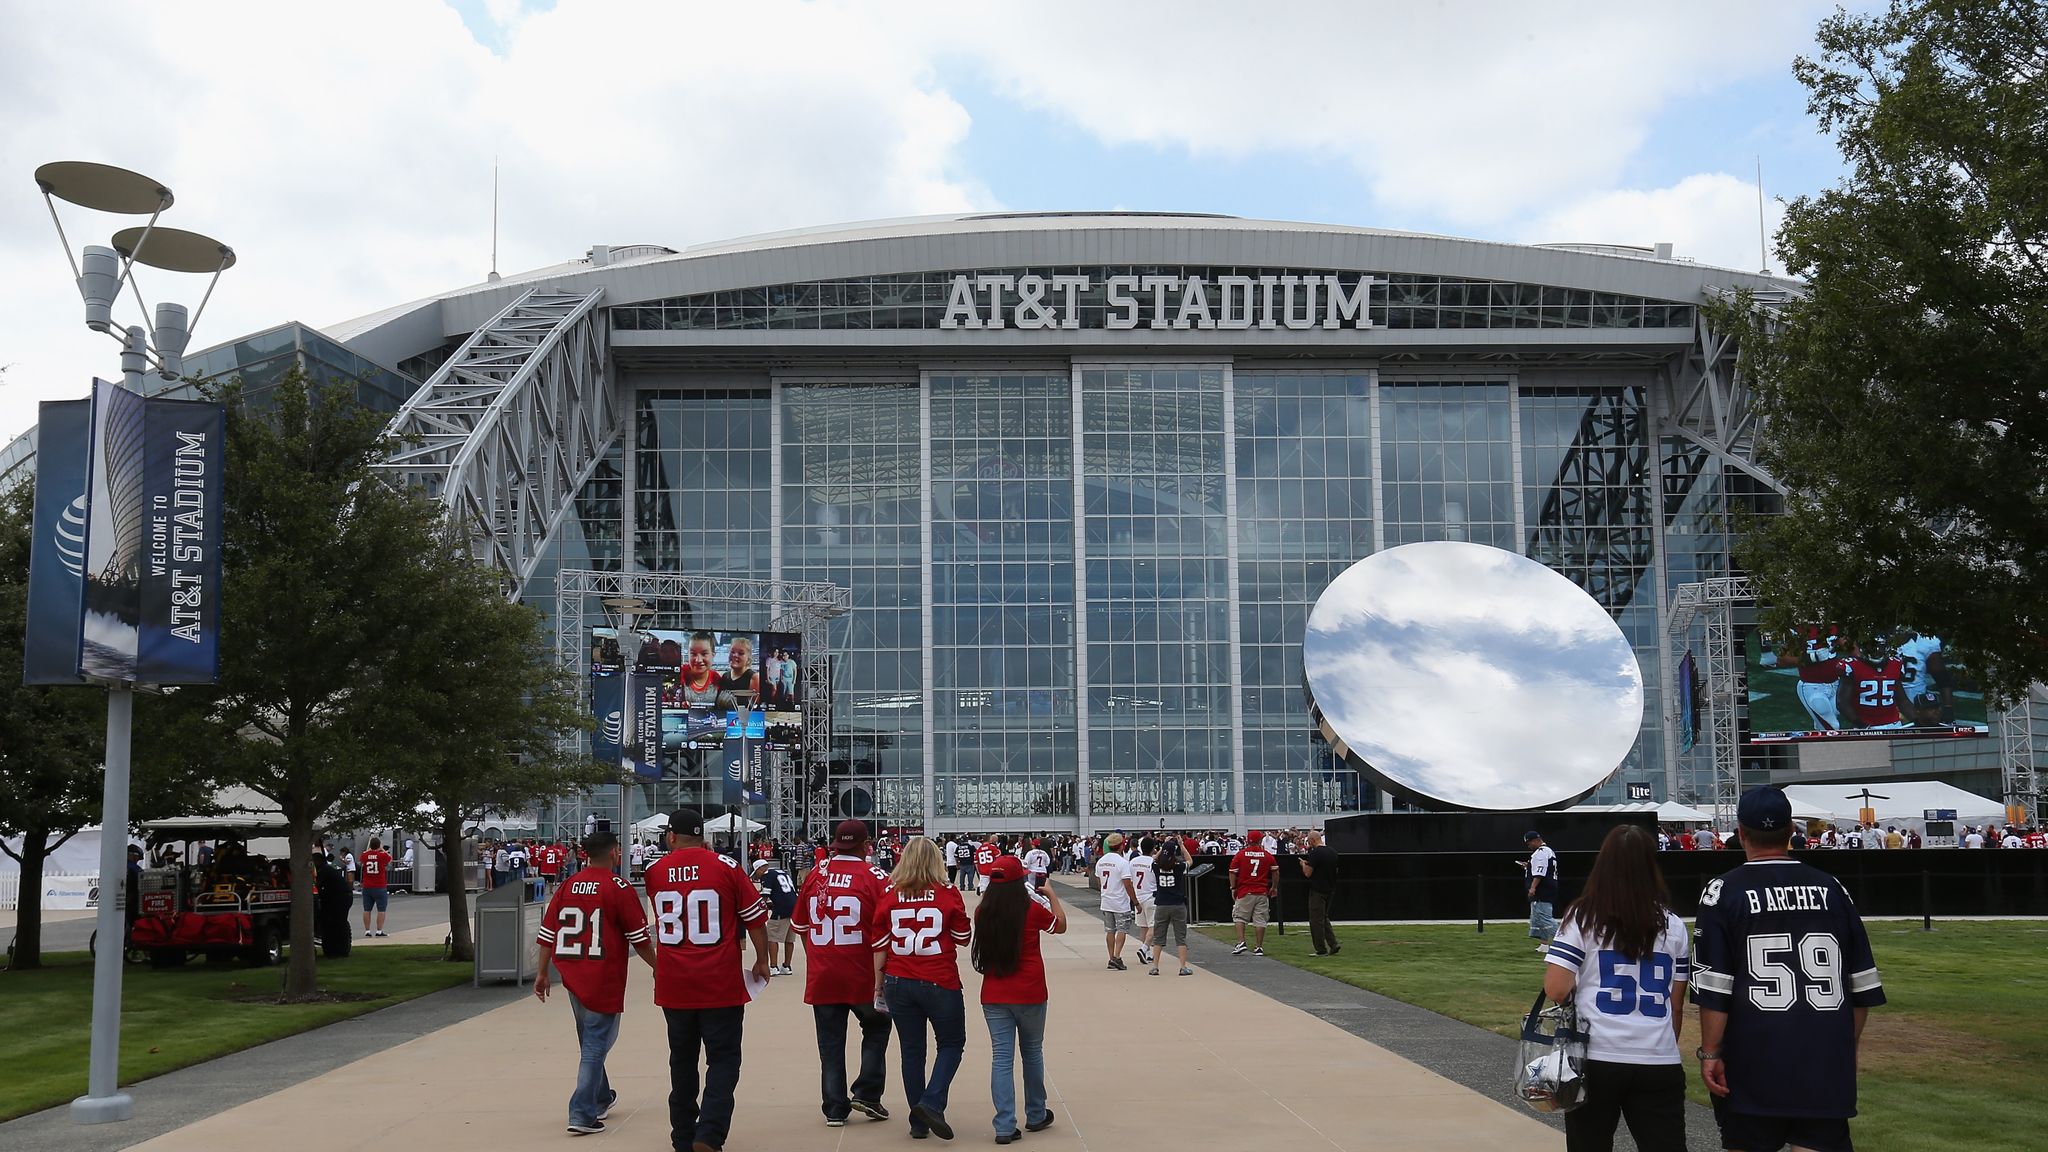 Dallas Cowboys' AT&T Stadium chosen to host 2018 NFL Draft, NFL News